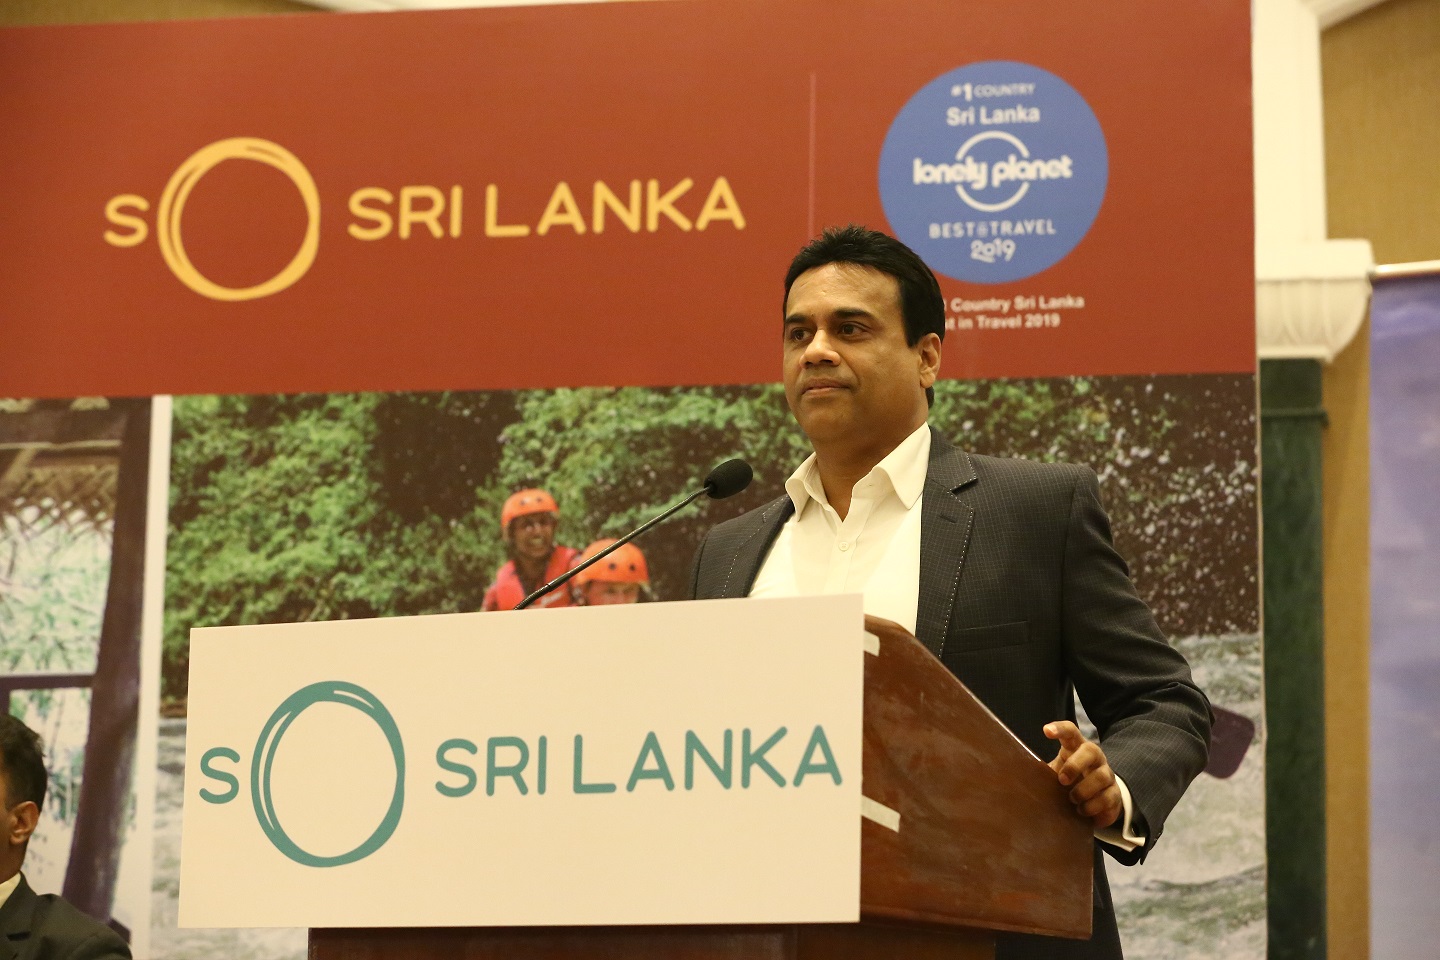 Mr. Kishu Gomes, Chairman, Sri Lanka Tourism Promotion Bureau